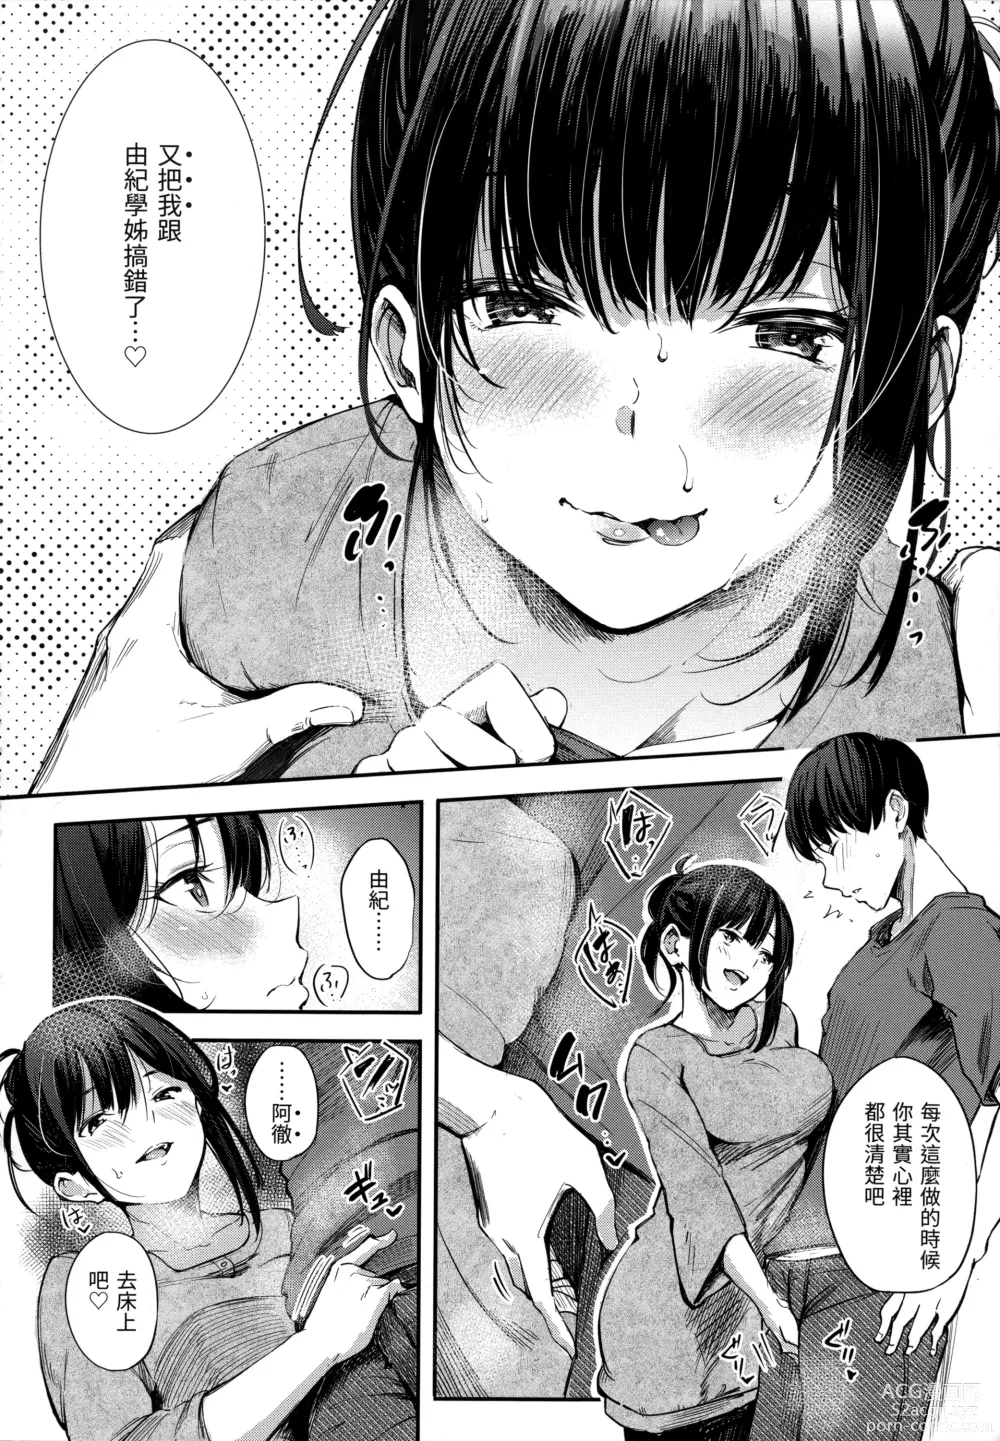 Page 14 of manga 祕密x祕密 (uncensored)